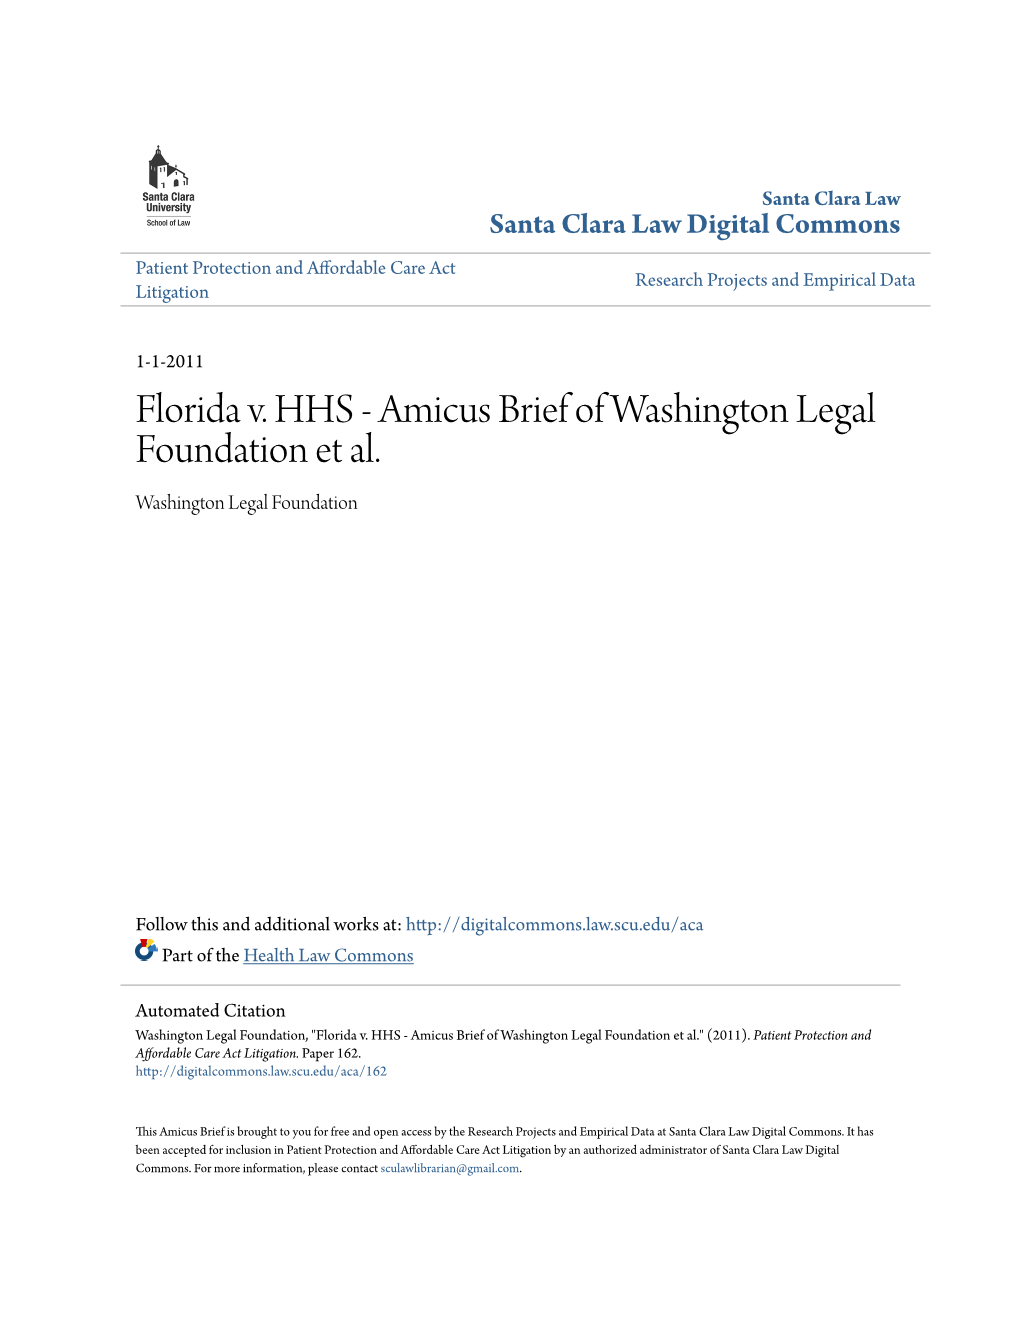 Amicus Brief of Washington Legal Foundation Et Al